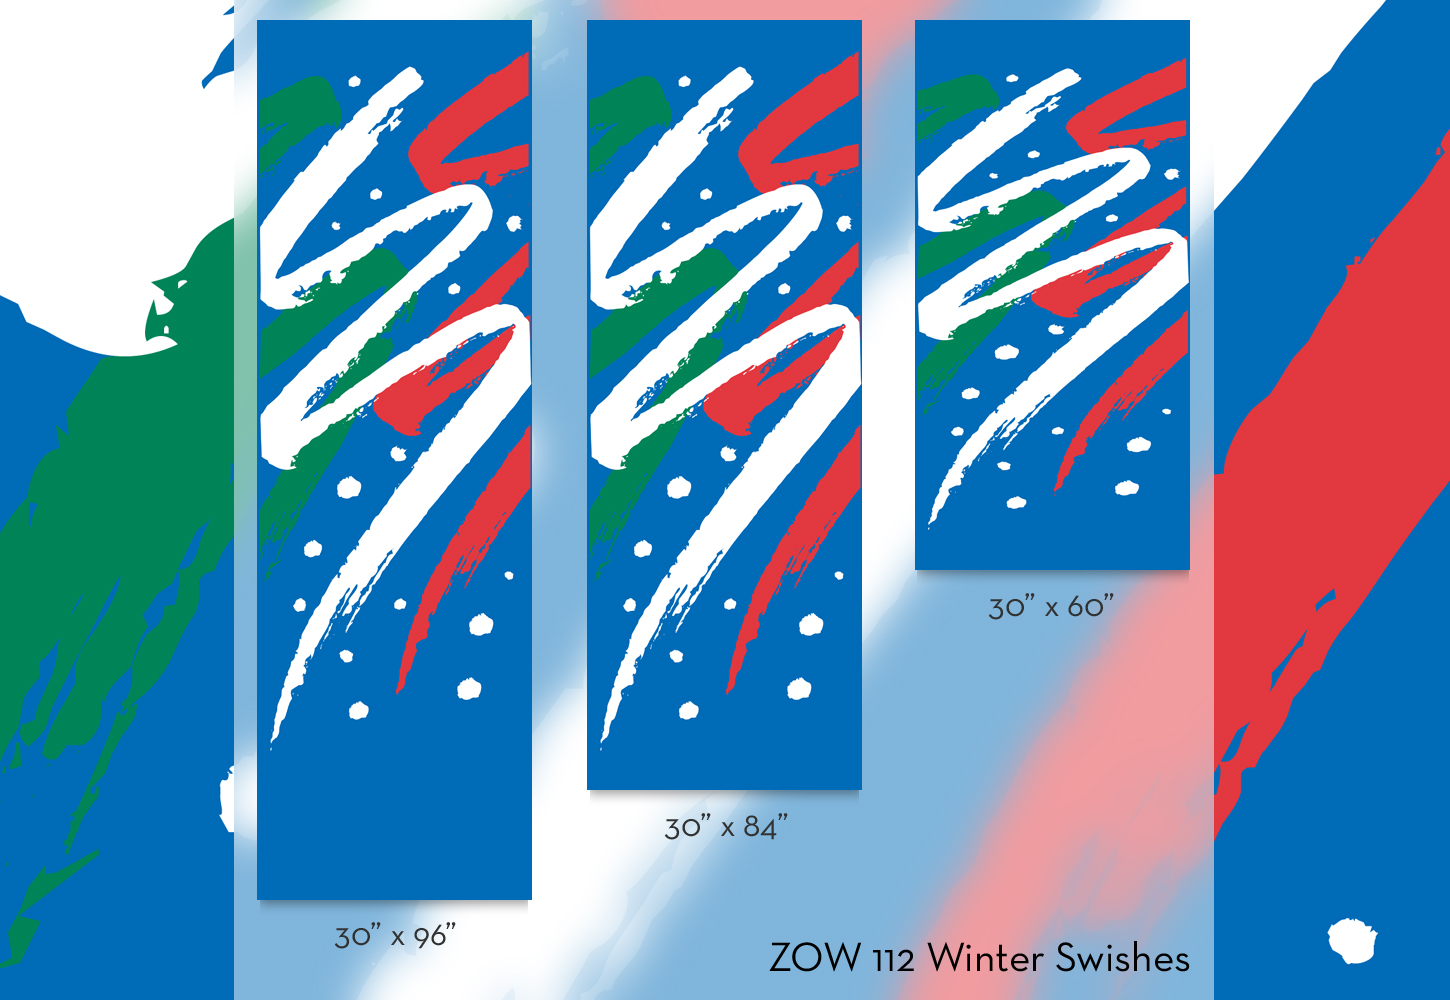 ZOW 112 Winter Swishes